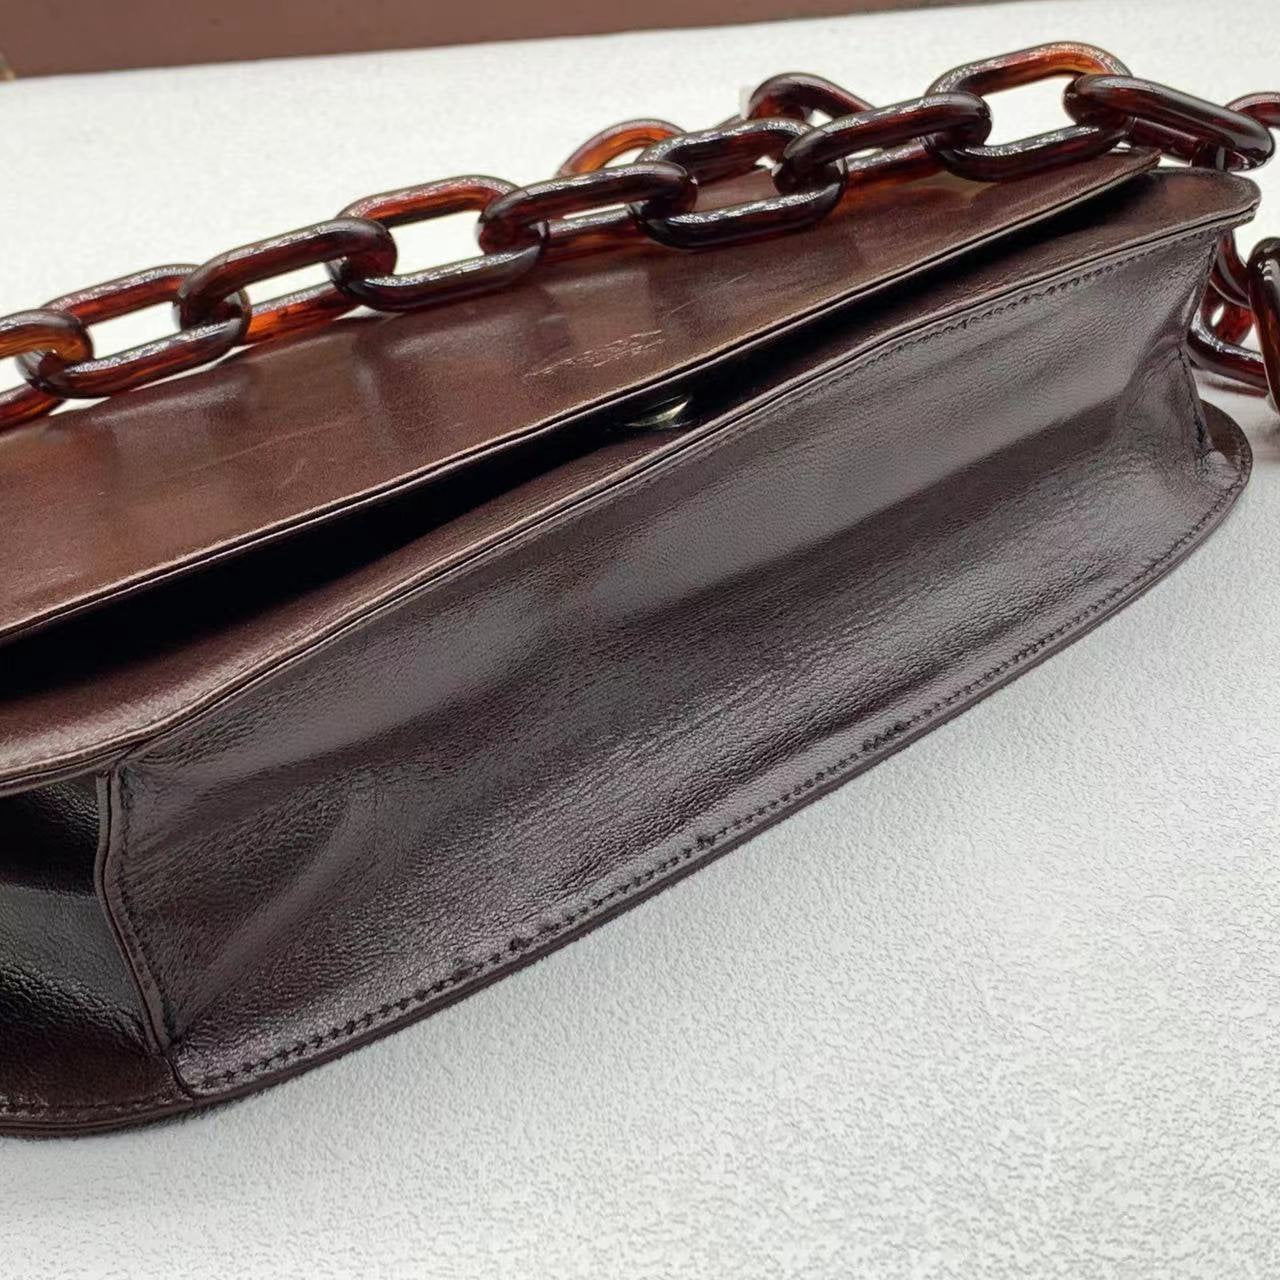 PRADA VINTAGE 100% Authentic Genuine Leather Shoulder Bag, Brown, 2000's, Good Condition